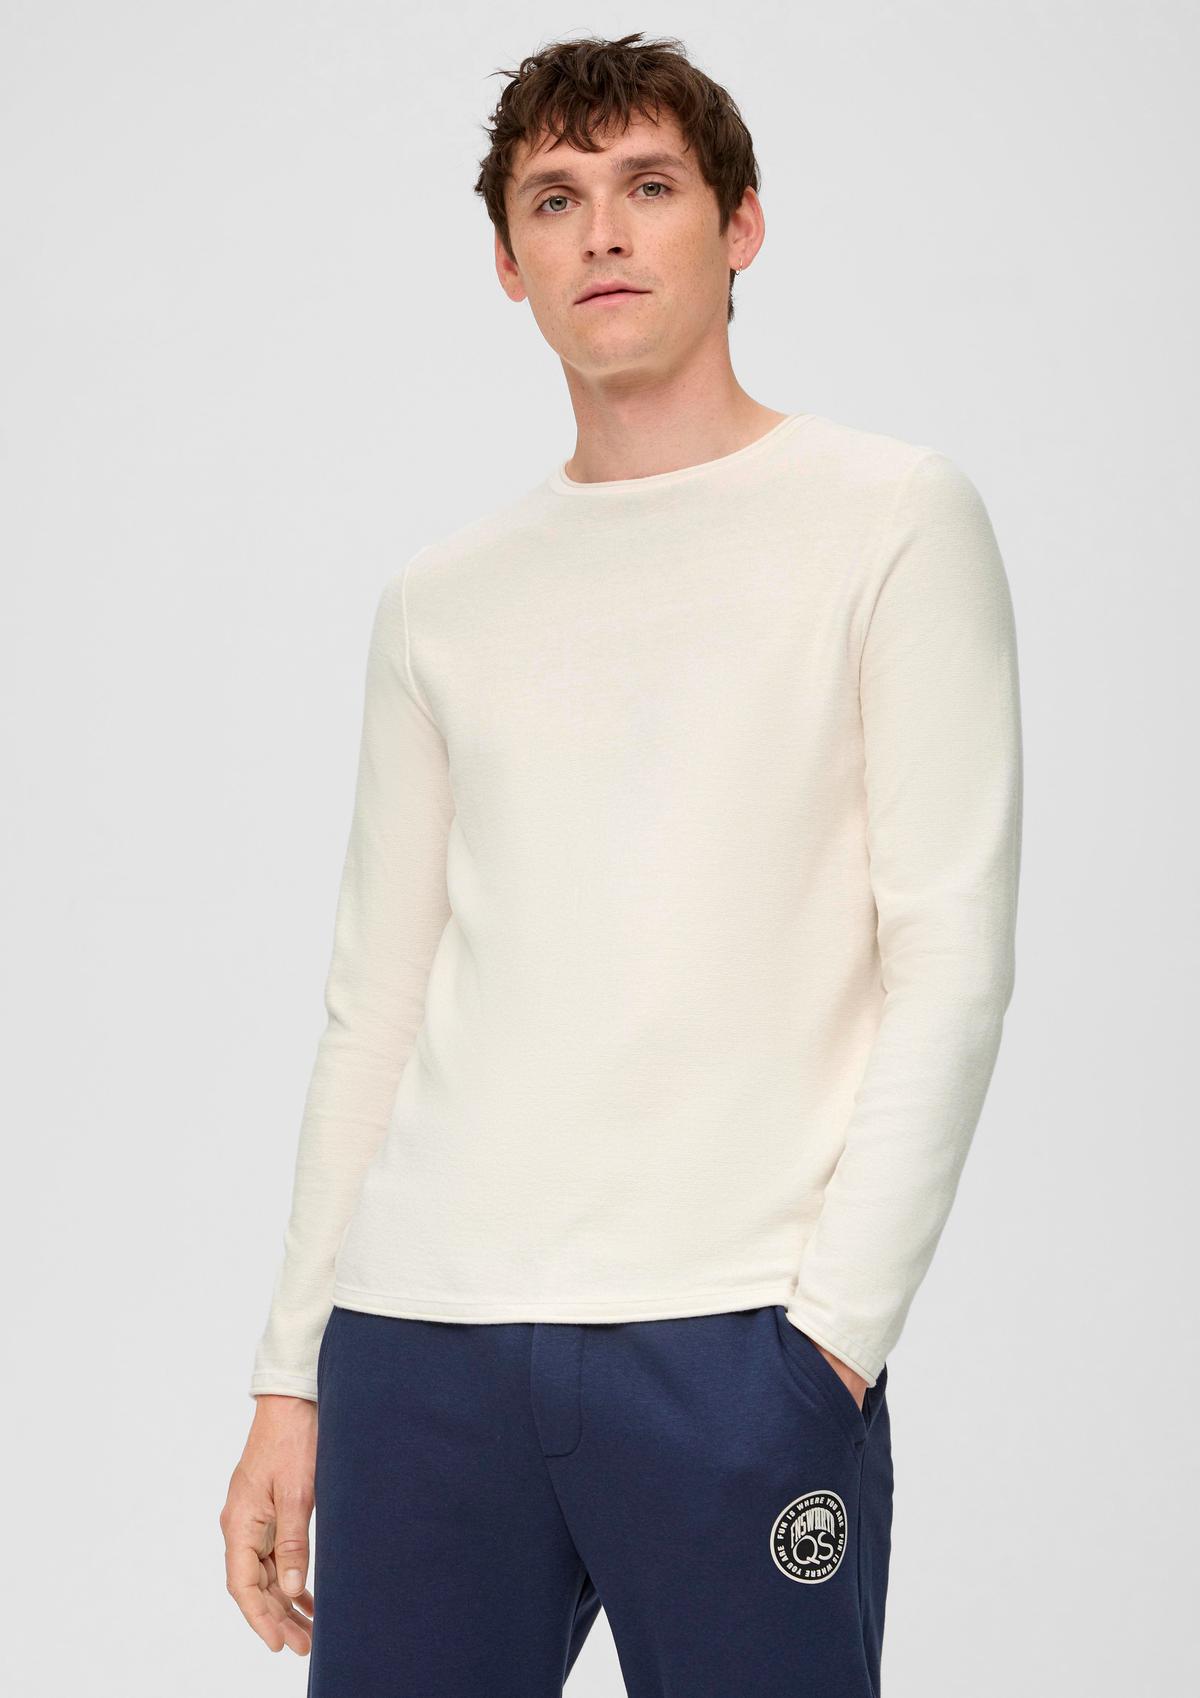 Garment-dyed jumper